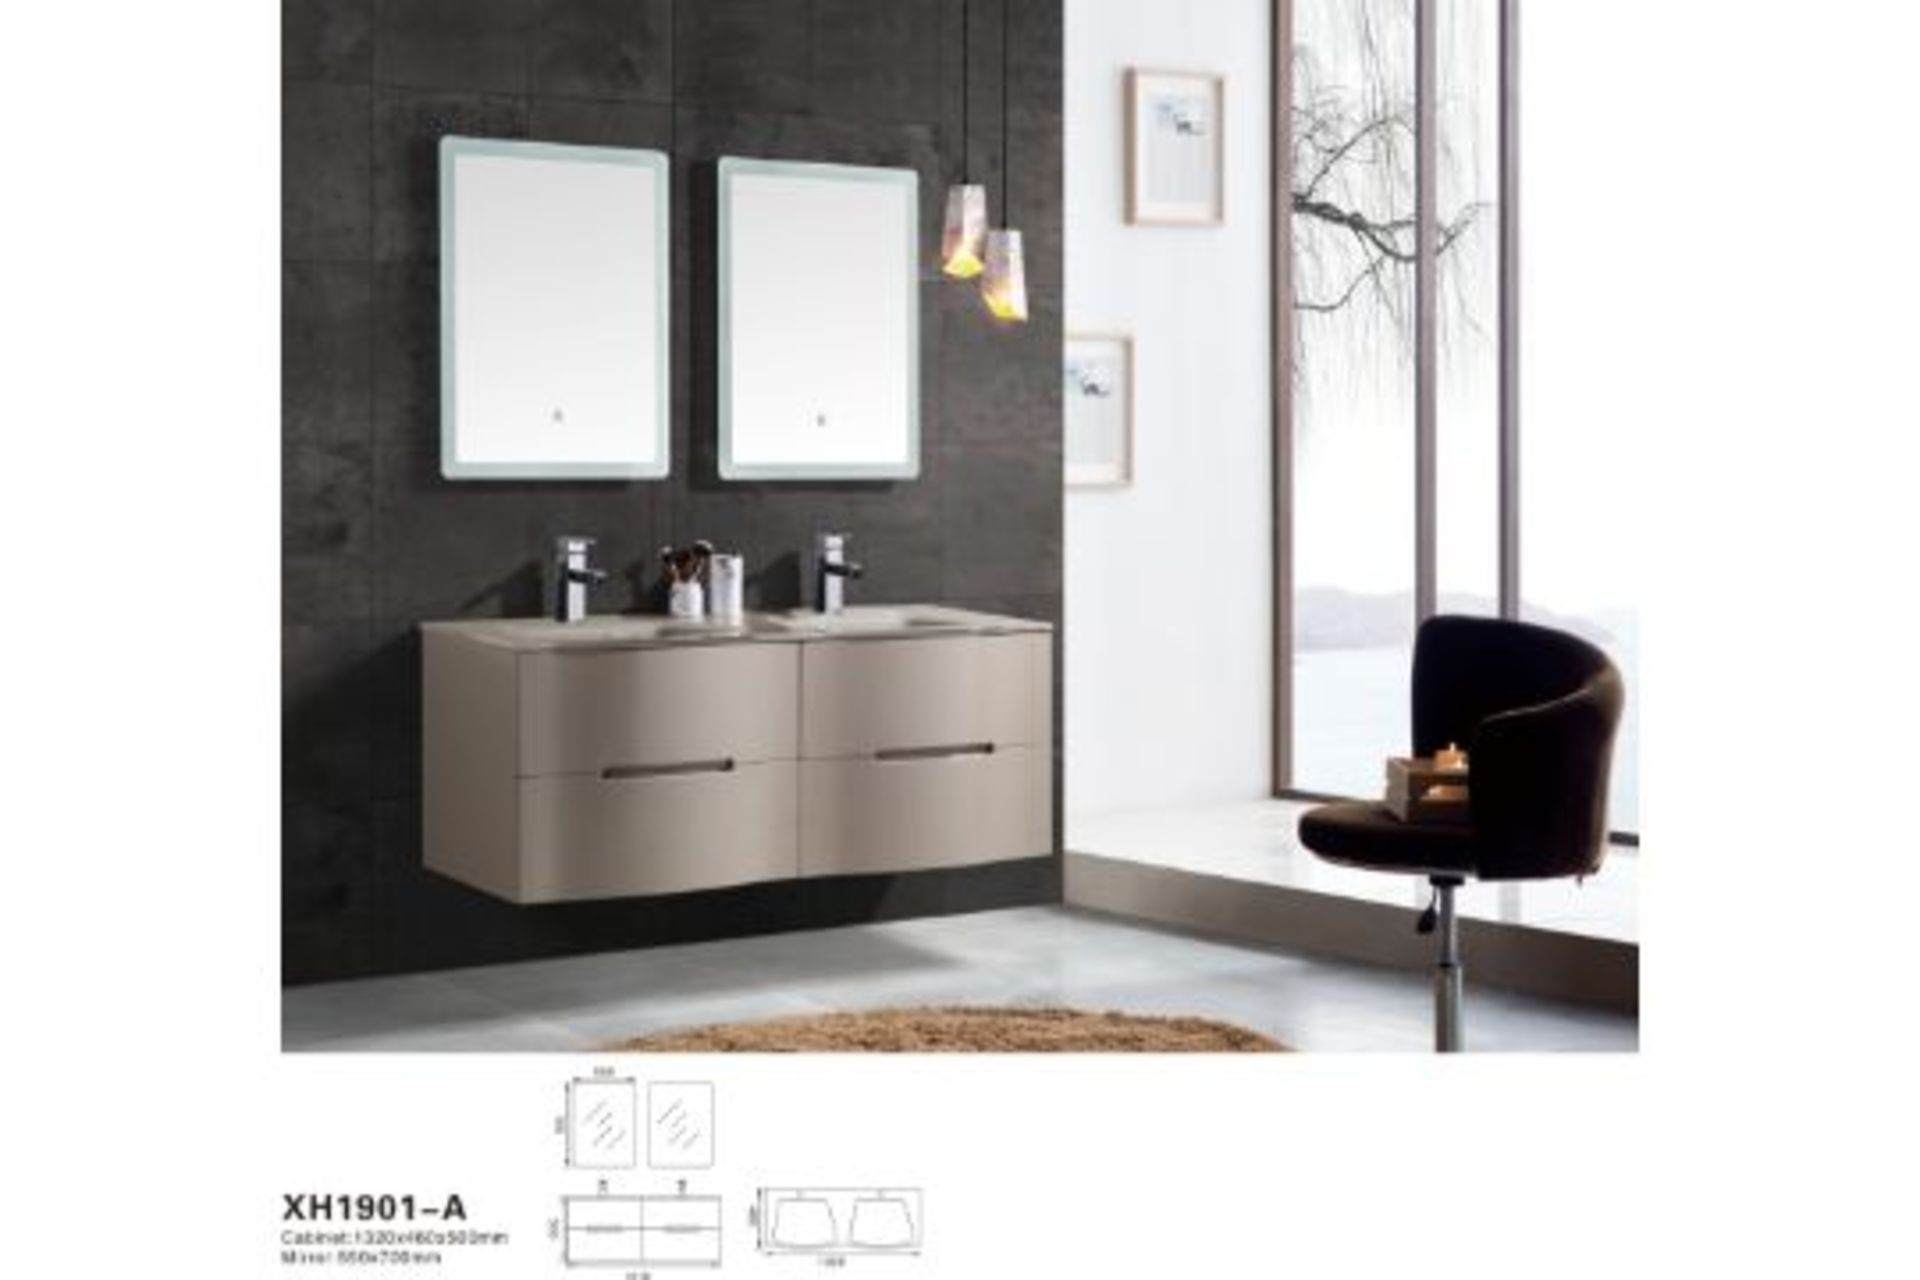 BRAND NEW Excellent Quality Designer Vanity Unit in Warm Grey RRP £699 *NO VAT* - Image 2 of 4